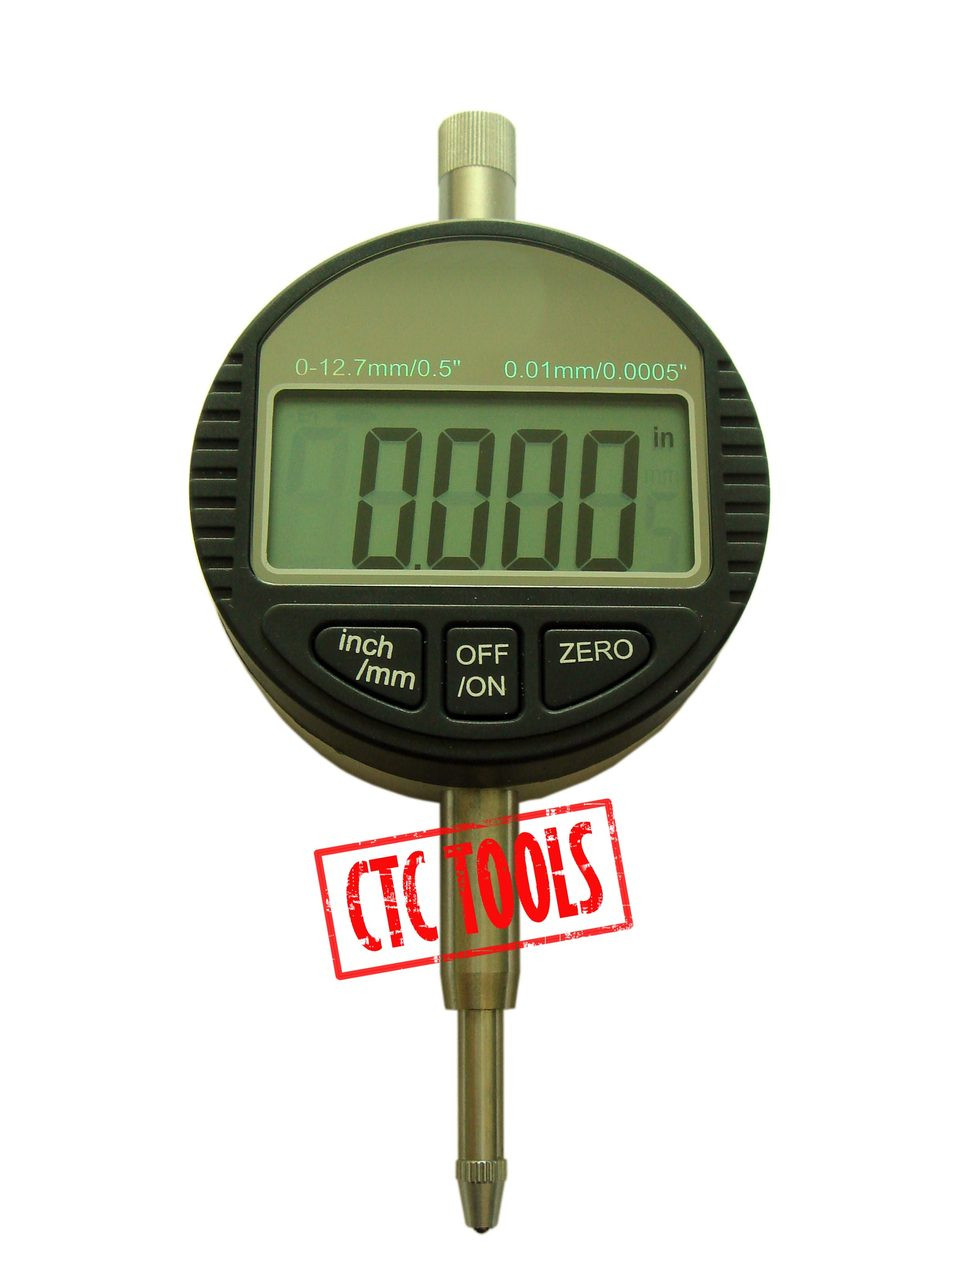 0.01mm/0.0005" Range 0-12.7mm/1" Gauge Digital Dial indicator Precision Tool x1 